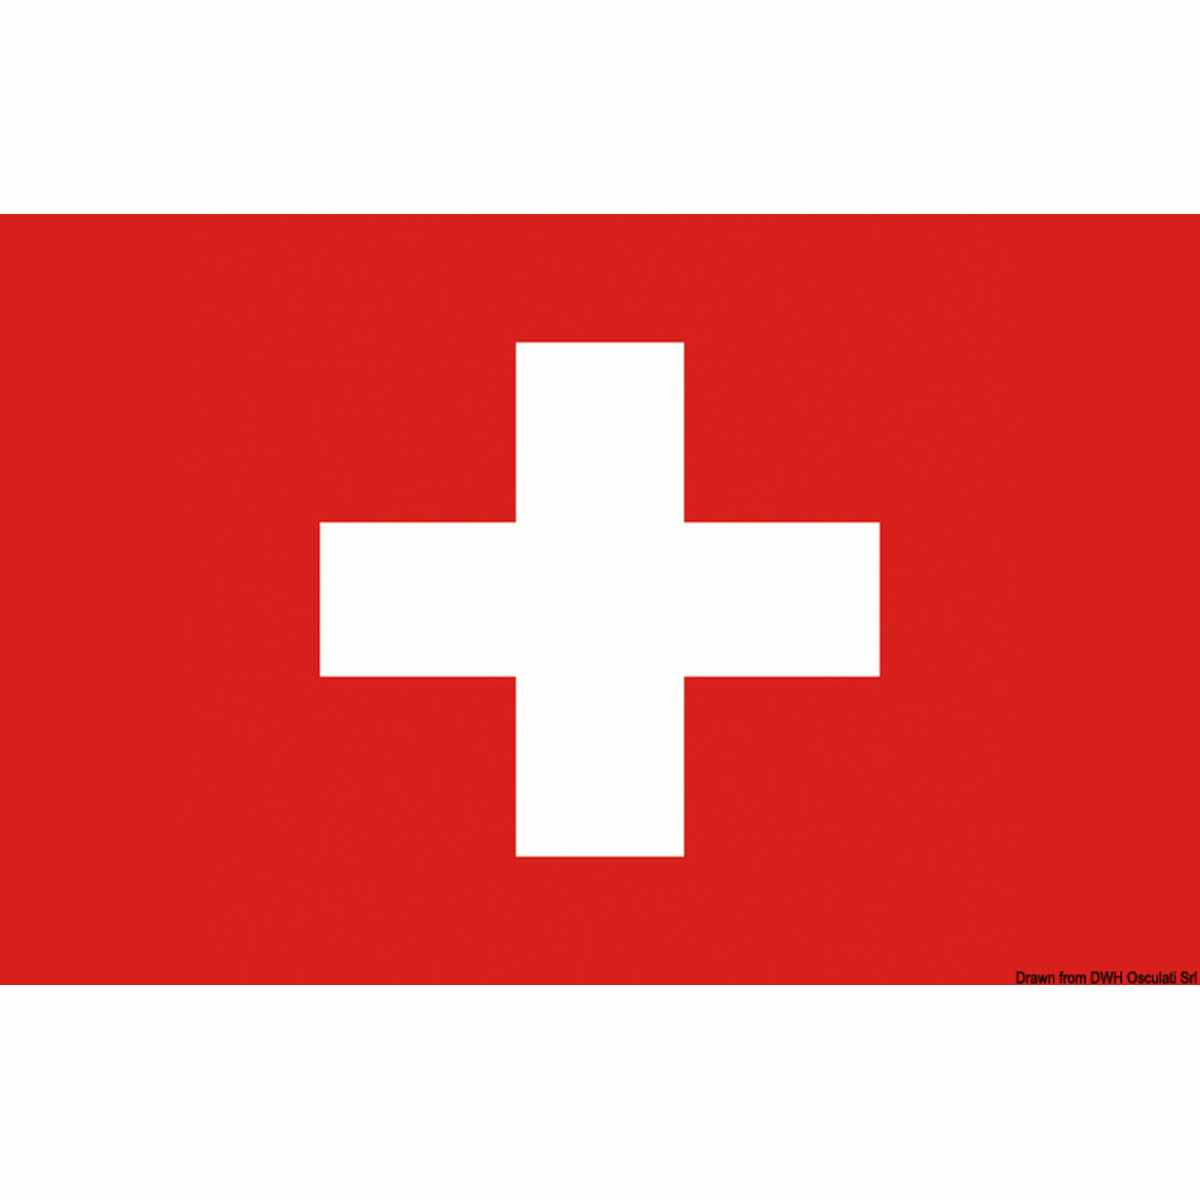 Flagge - Schweiz